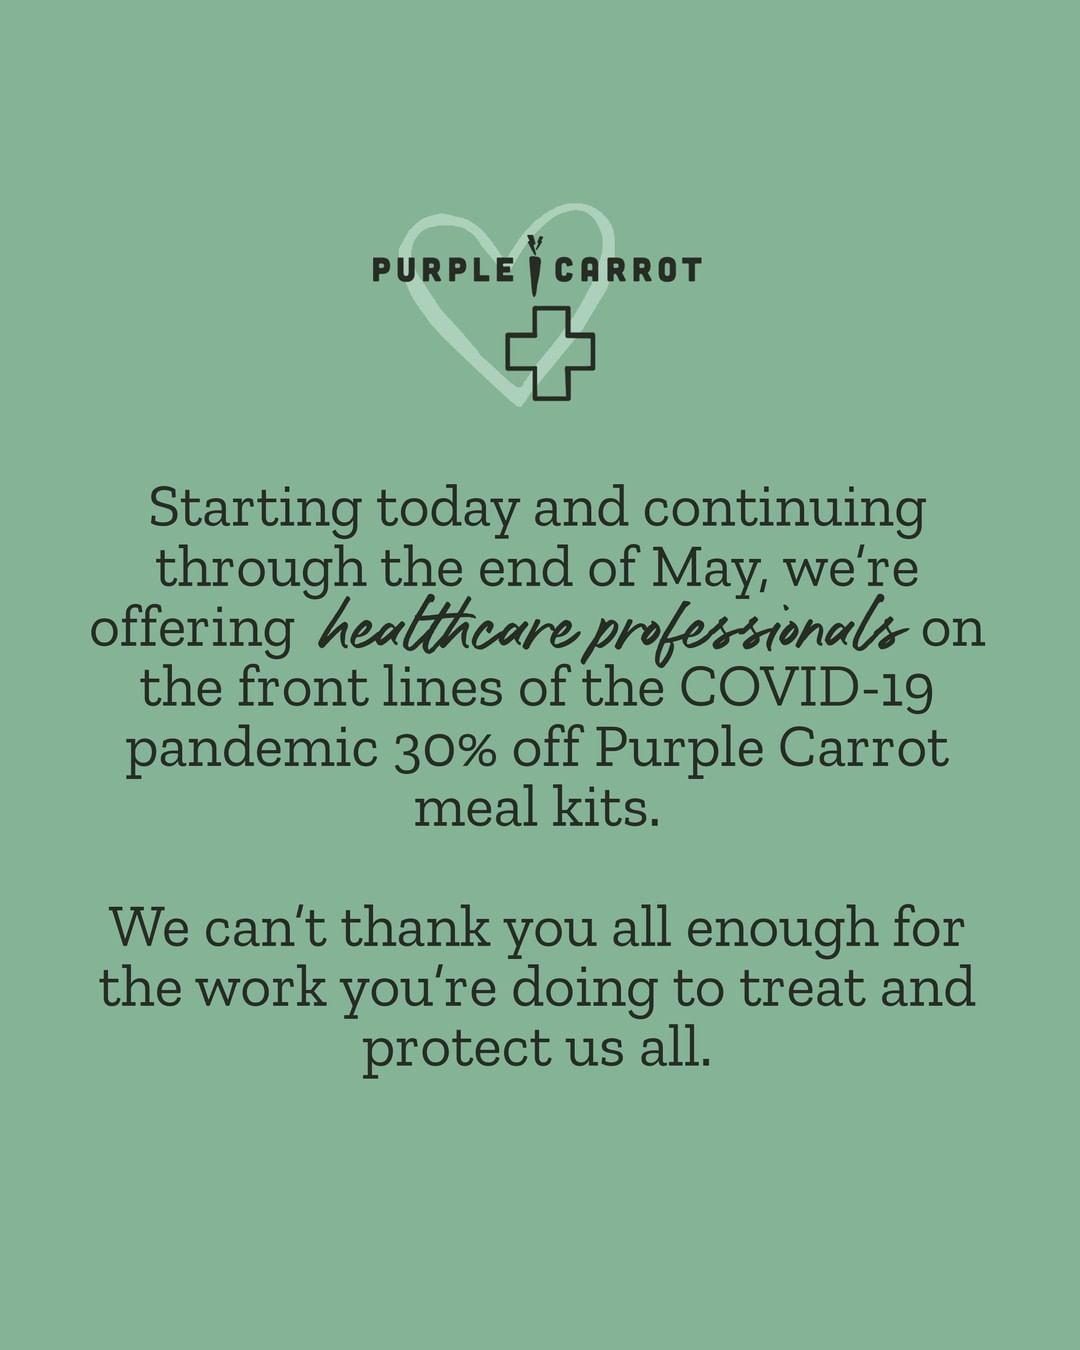 Purple Carrot’s Instagram post announcing its healthcare worker discount.